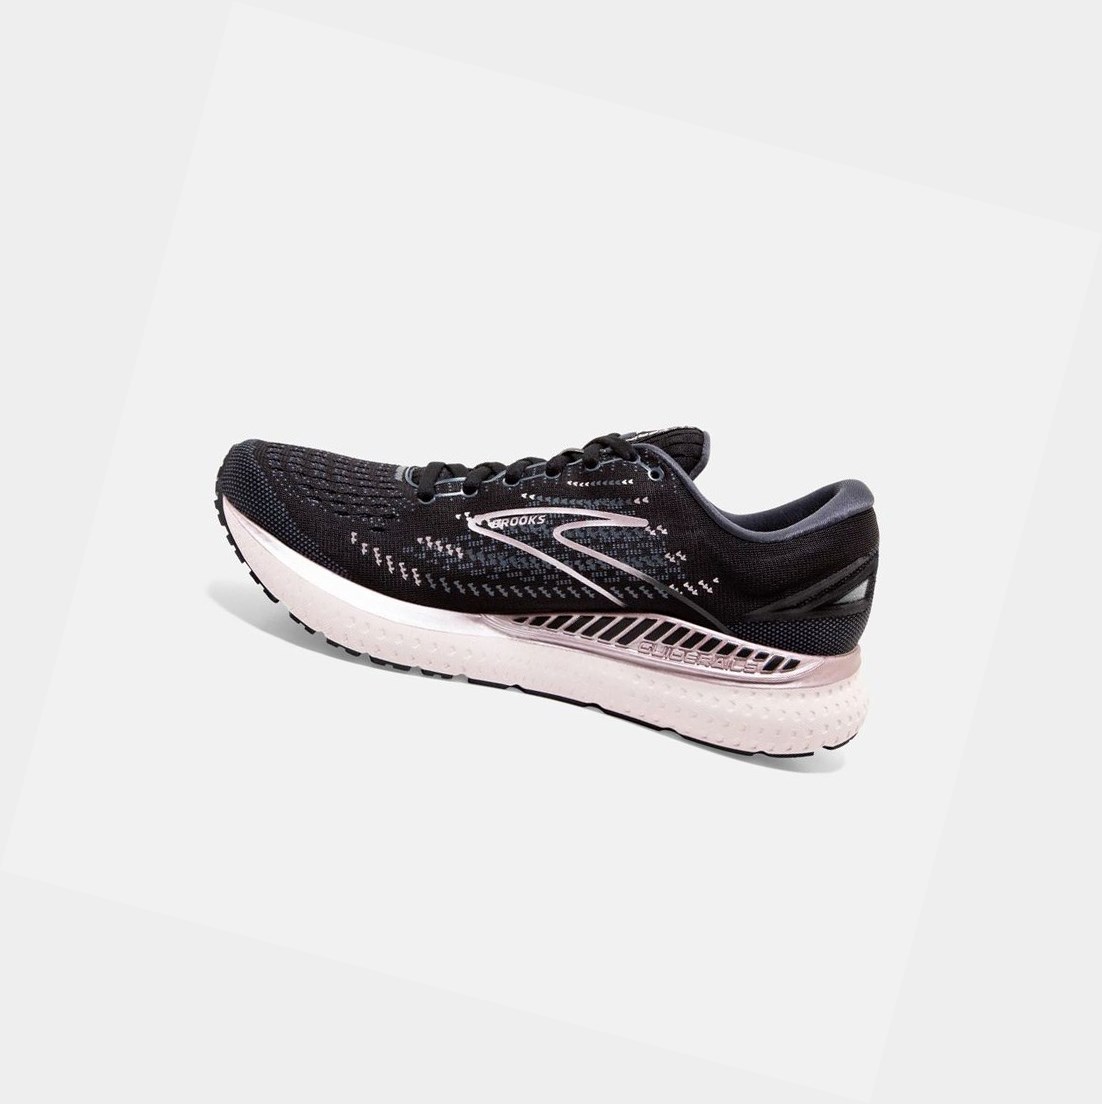 Brooks Glycerin GTS 19 Women's Road Running Shoes Black / Ombre / Metallic | ZQHF-94675